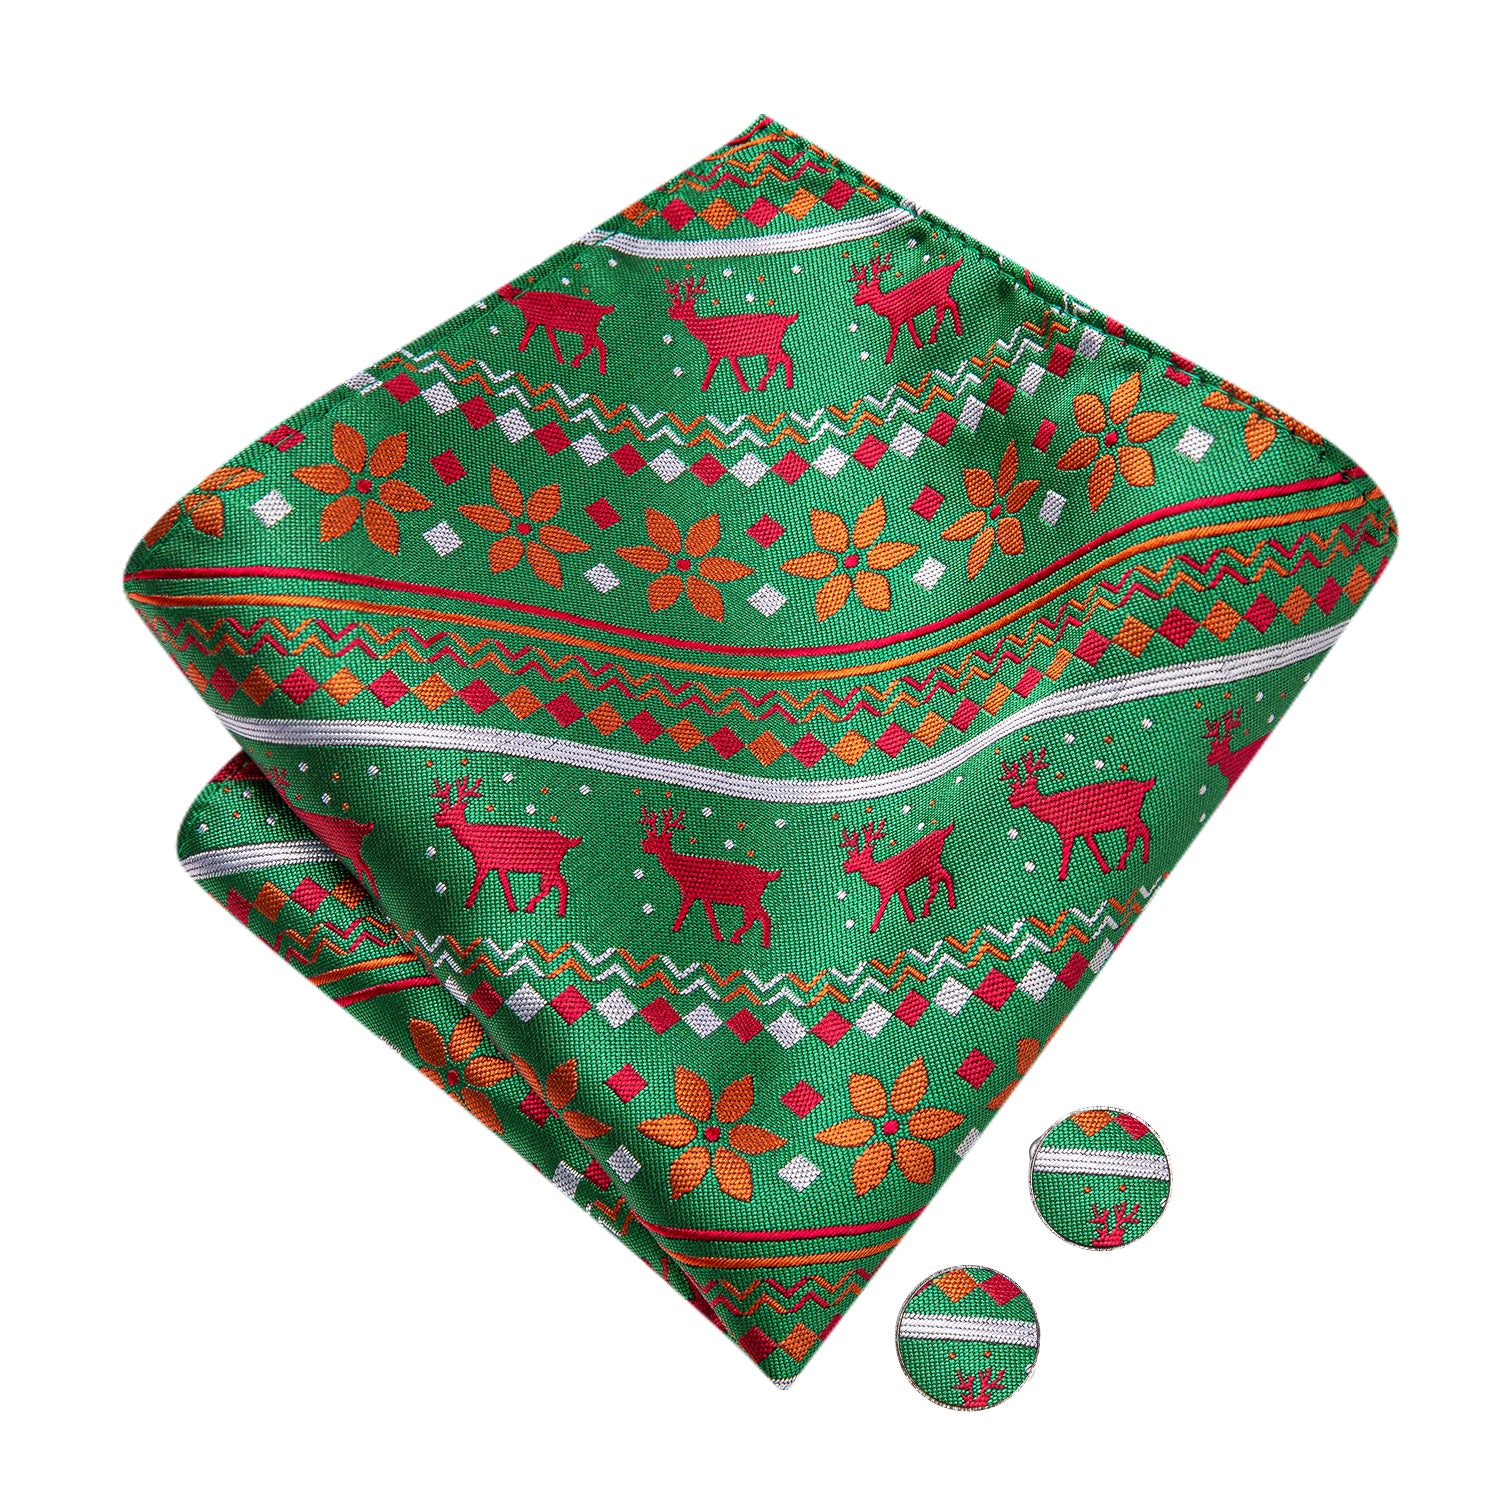 Christmas Green Novelty Pre-tied Bow Tie Hanky Cufflinks Set